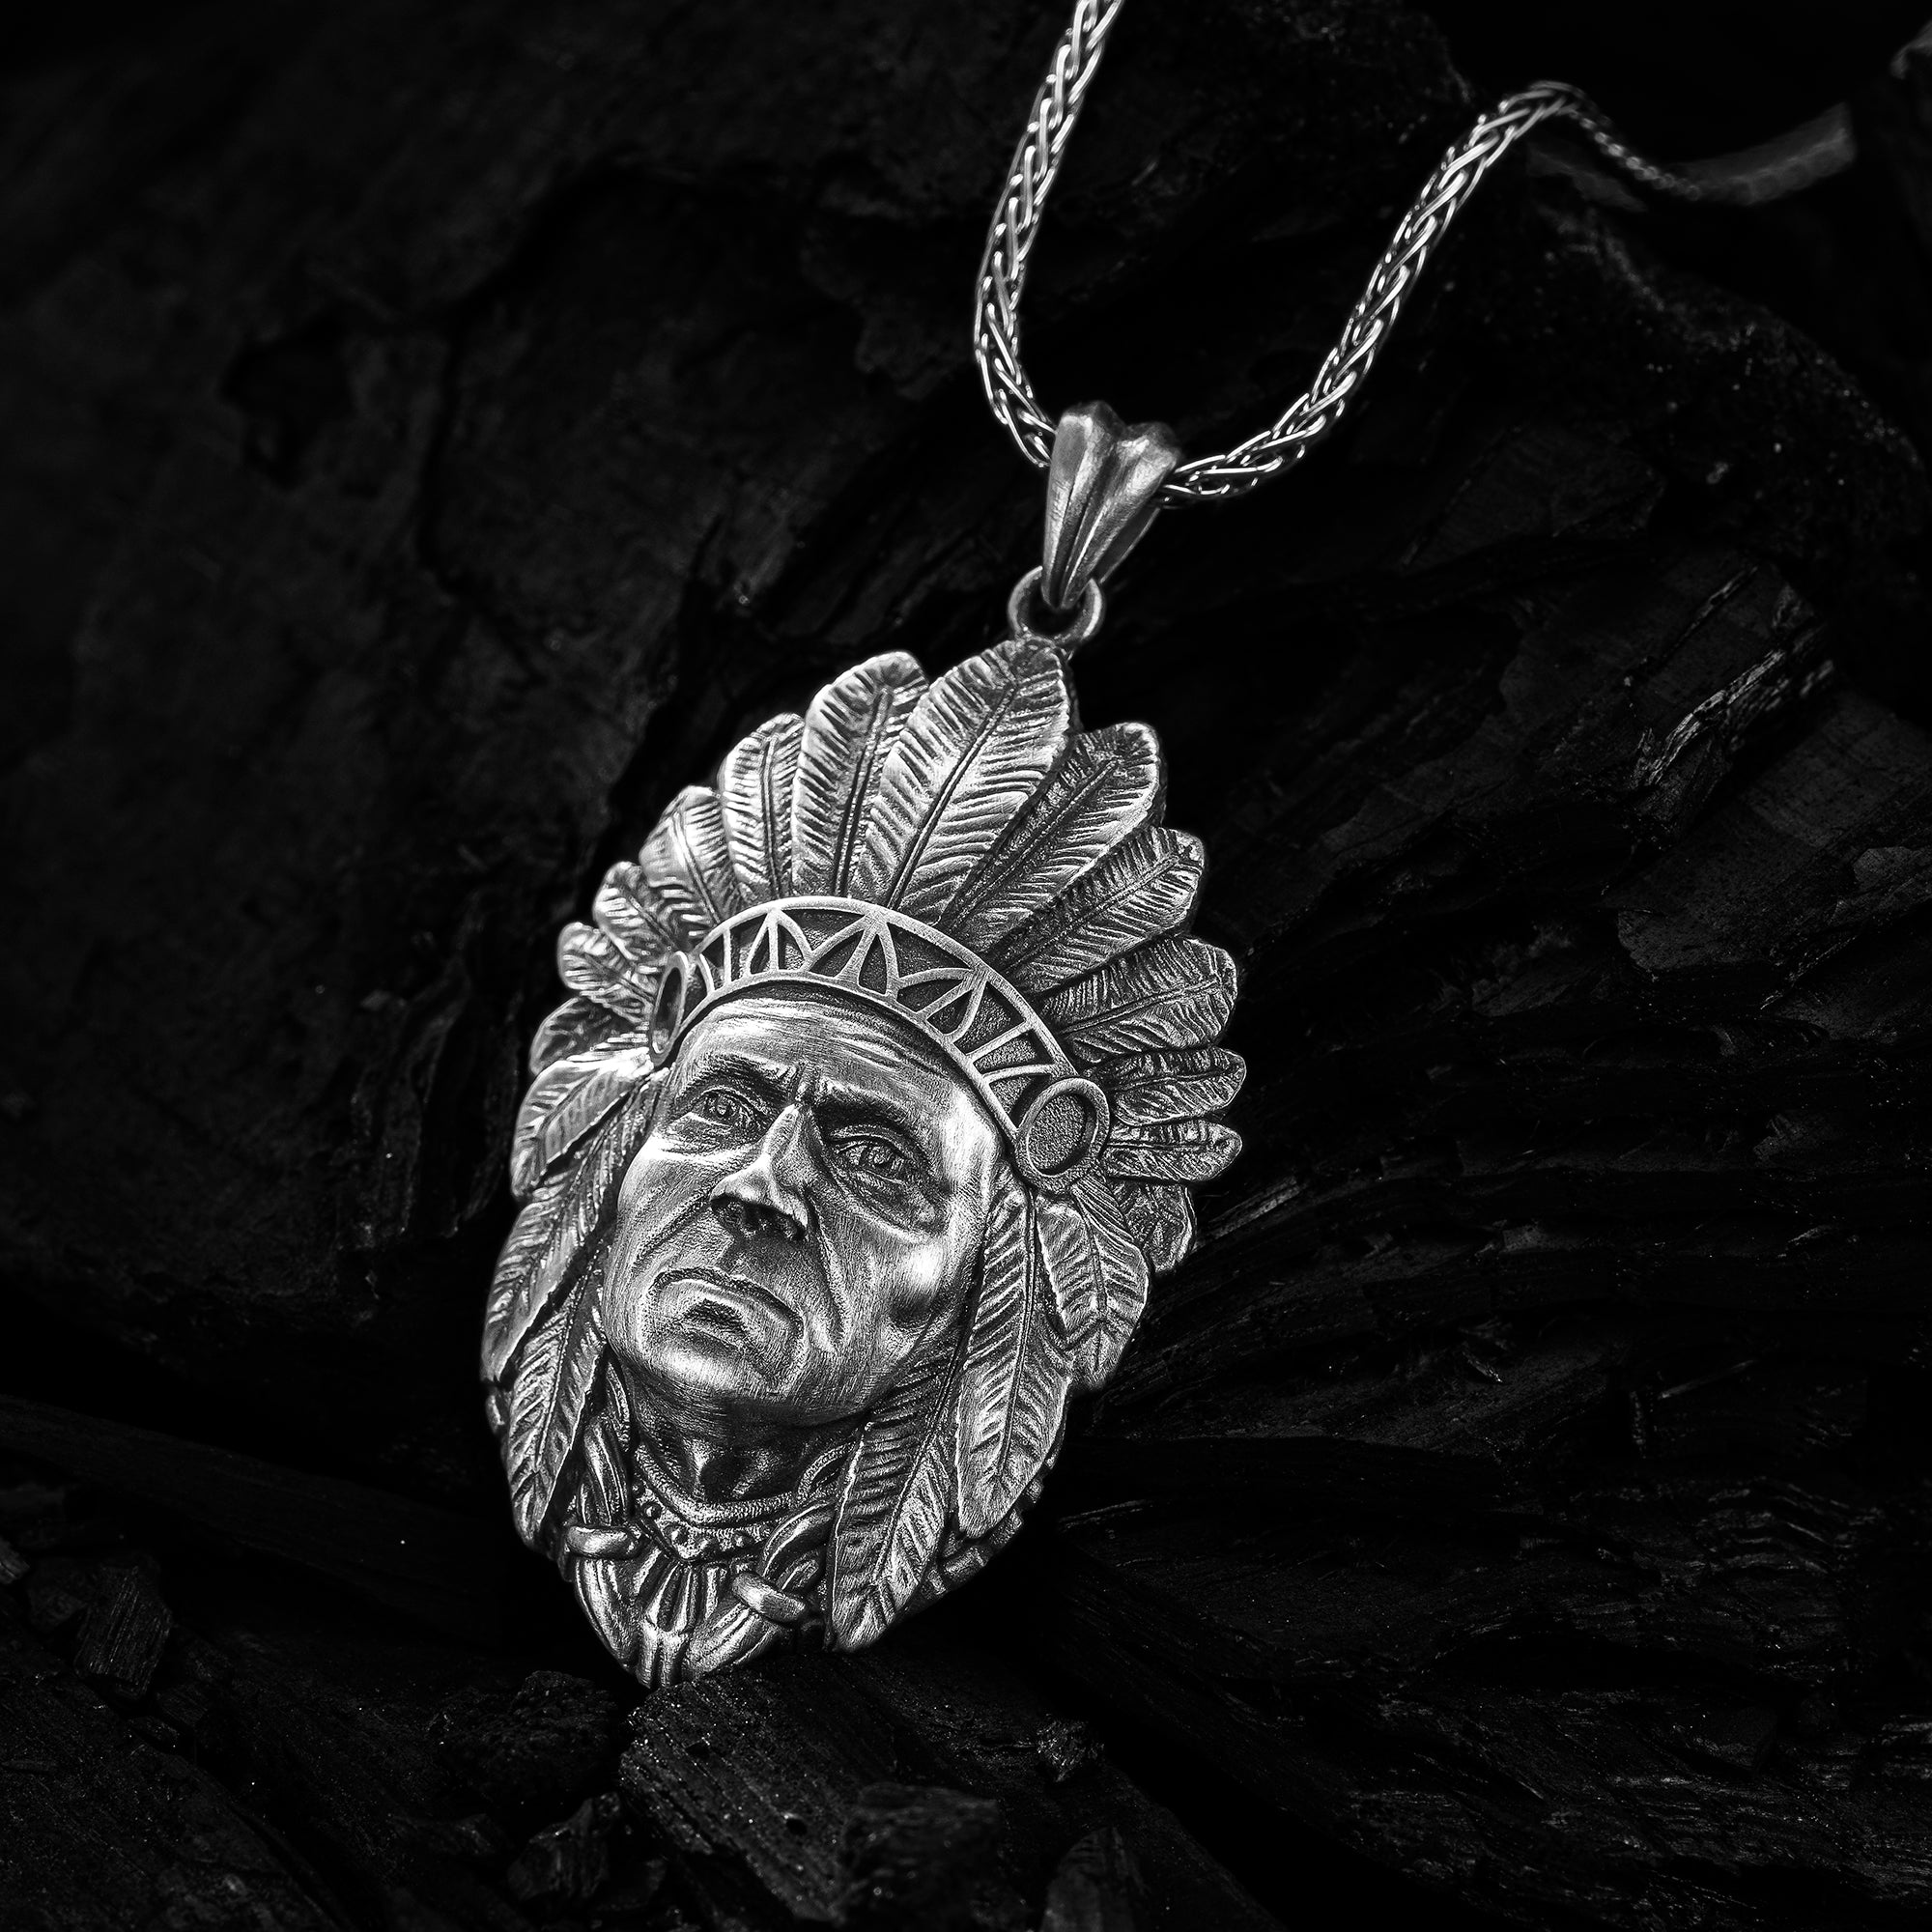 Indian Warrior Necklace